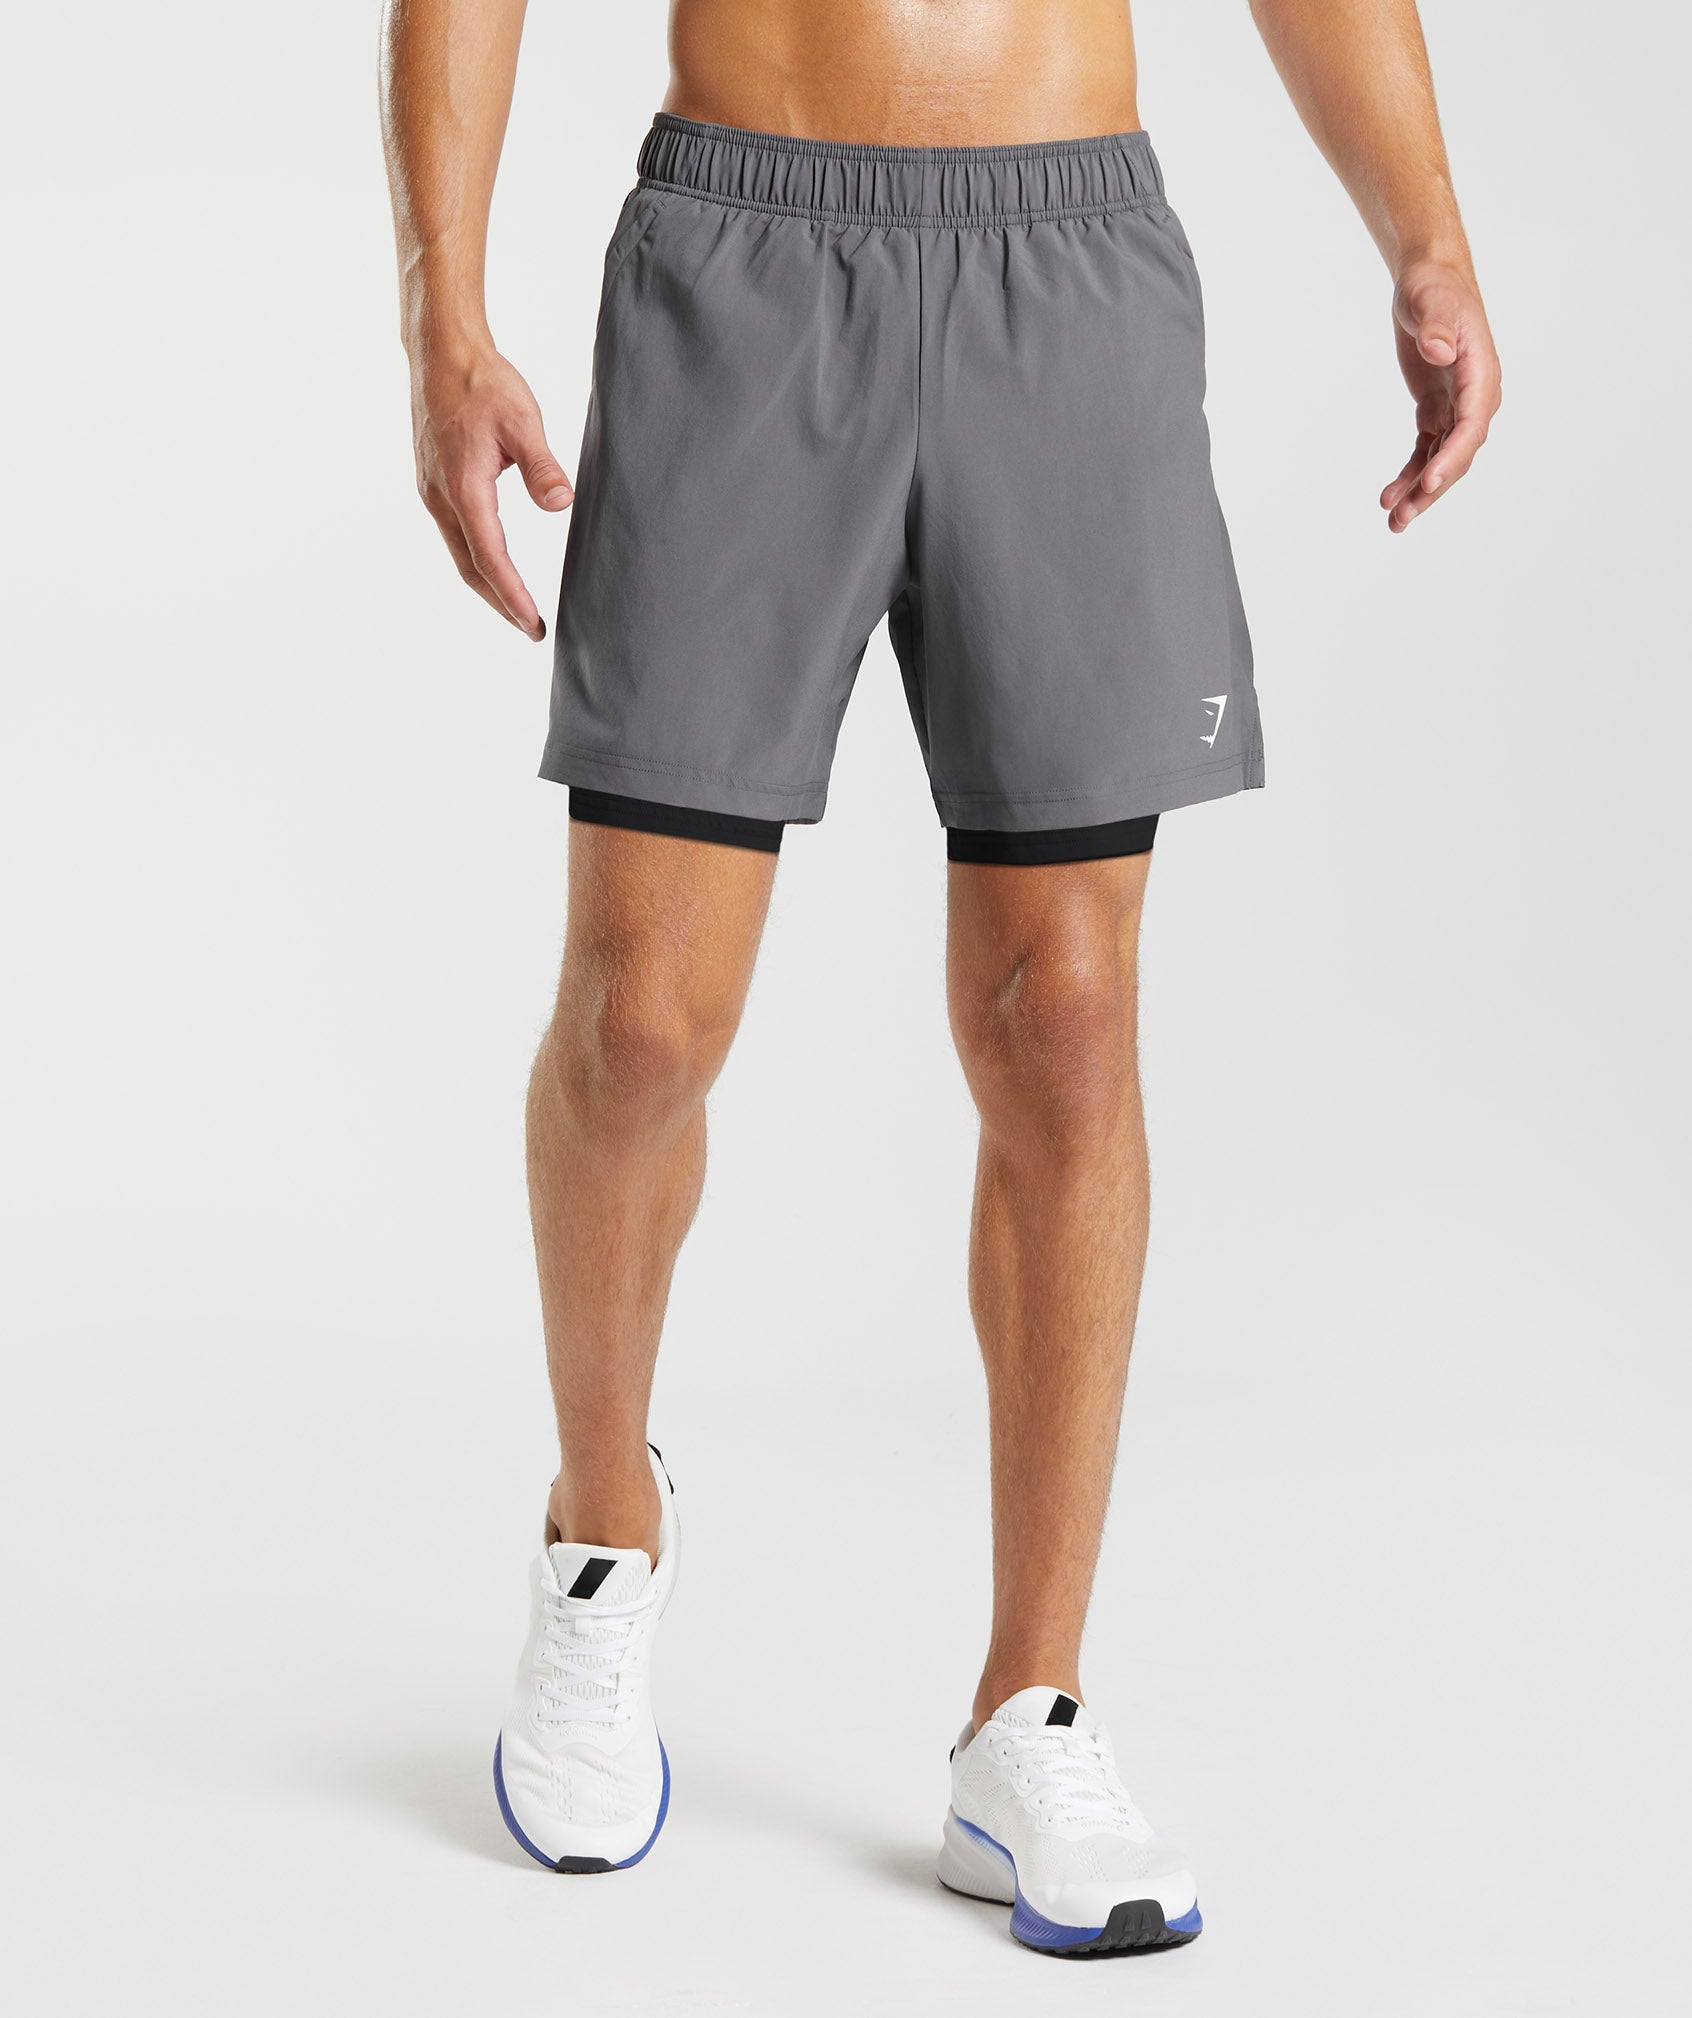 Gymshark Sport 7 2 In 1 Shorts - Black/Silhouette Grey